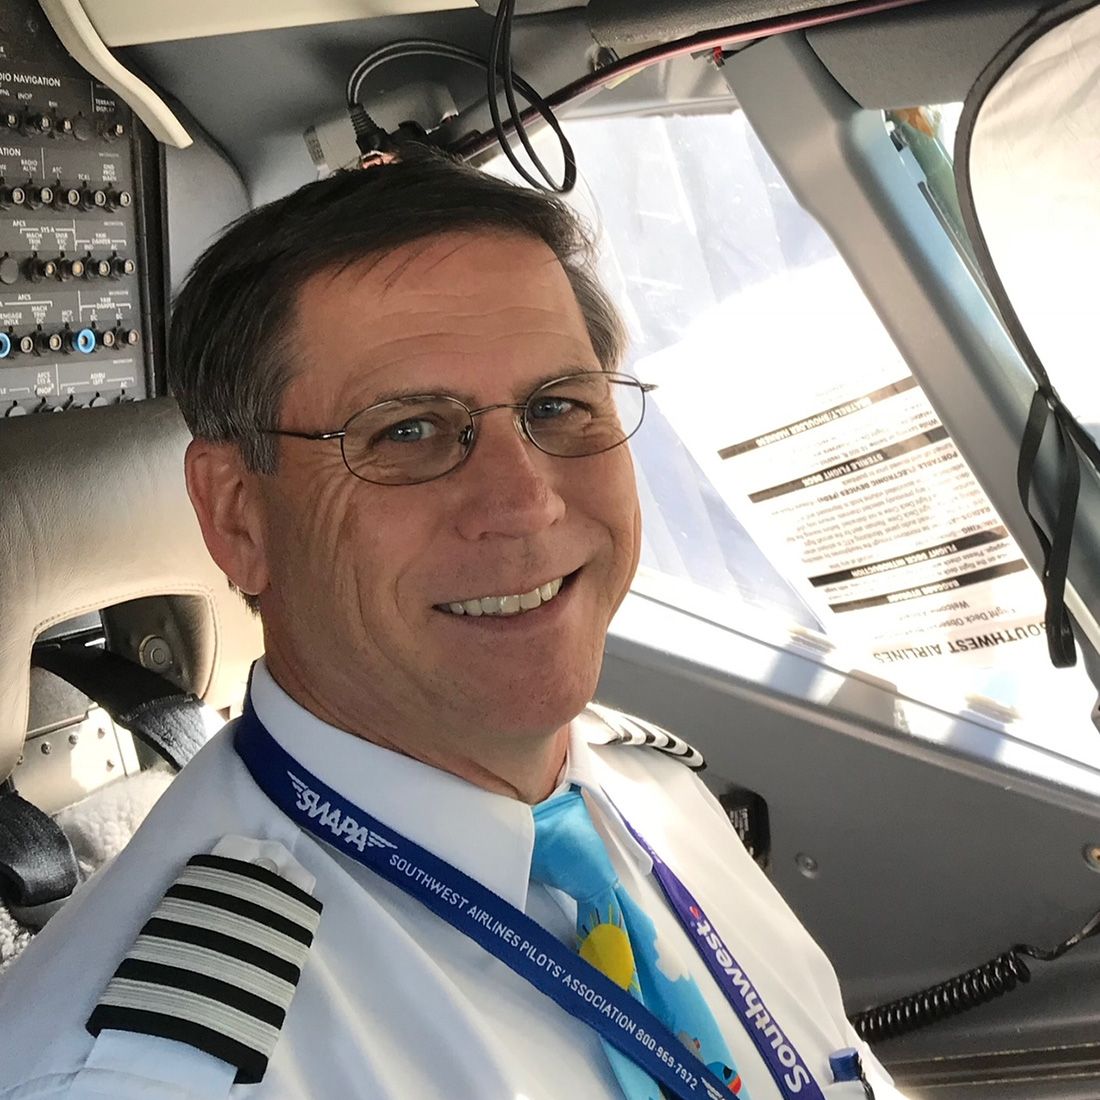 Paul Britton wearing a captain’s uniform in the cockpit of a commercial jet